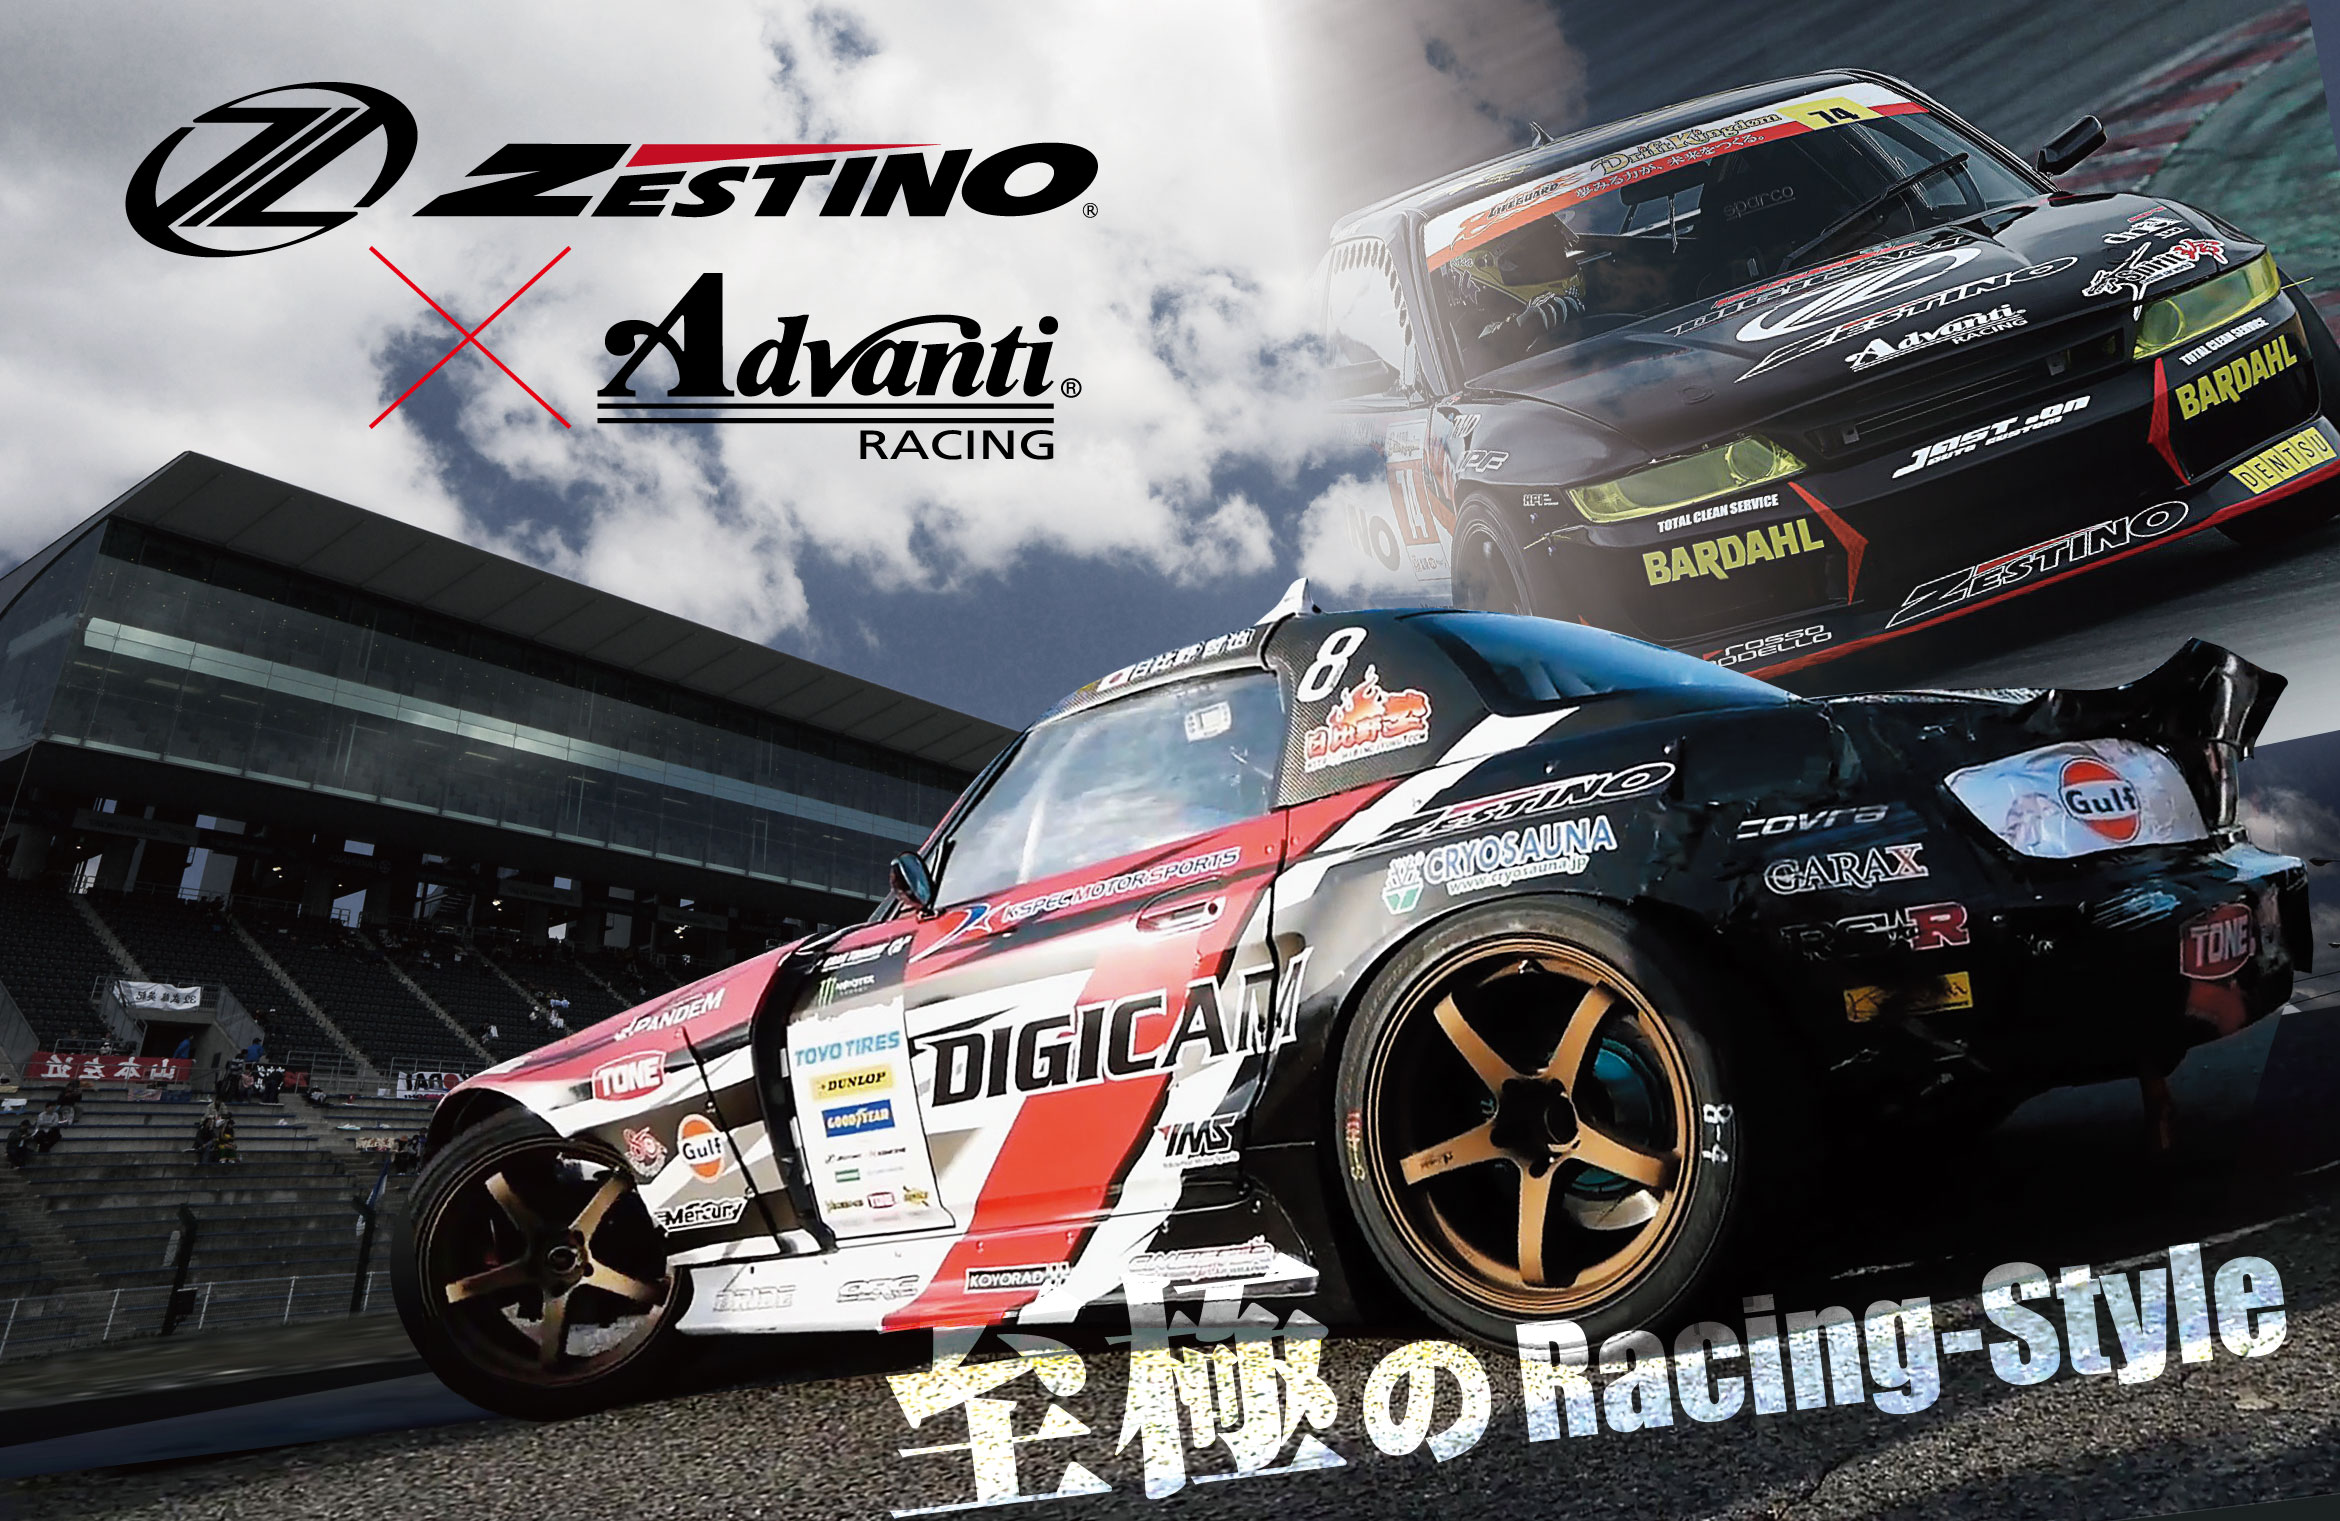 N637 - ZESTINO × Advanti Racing